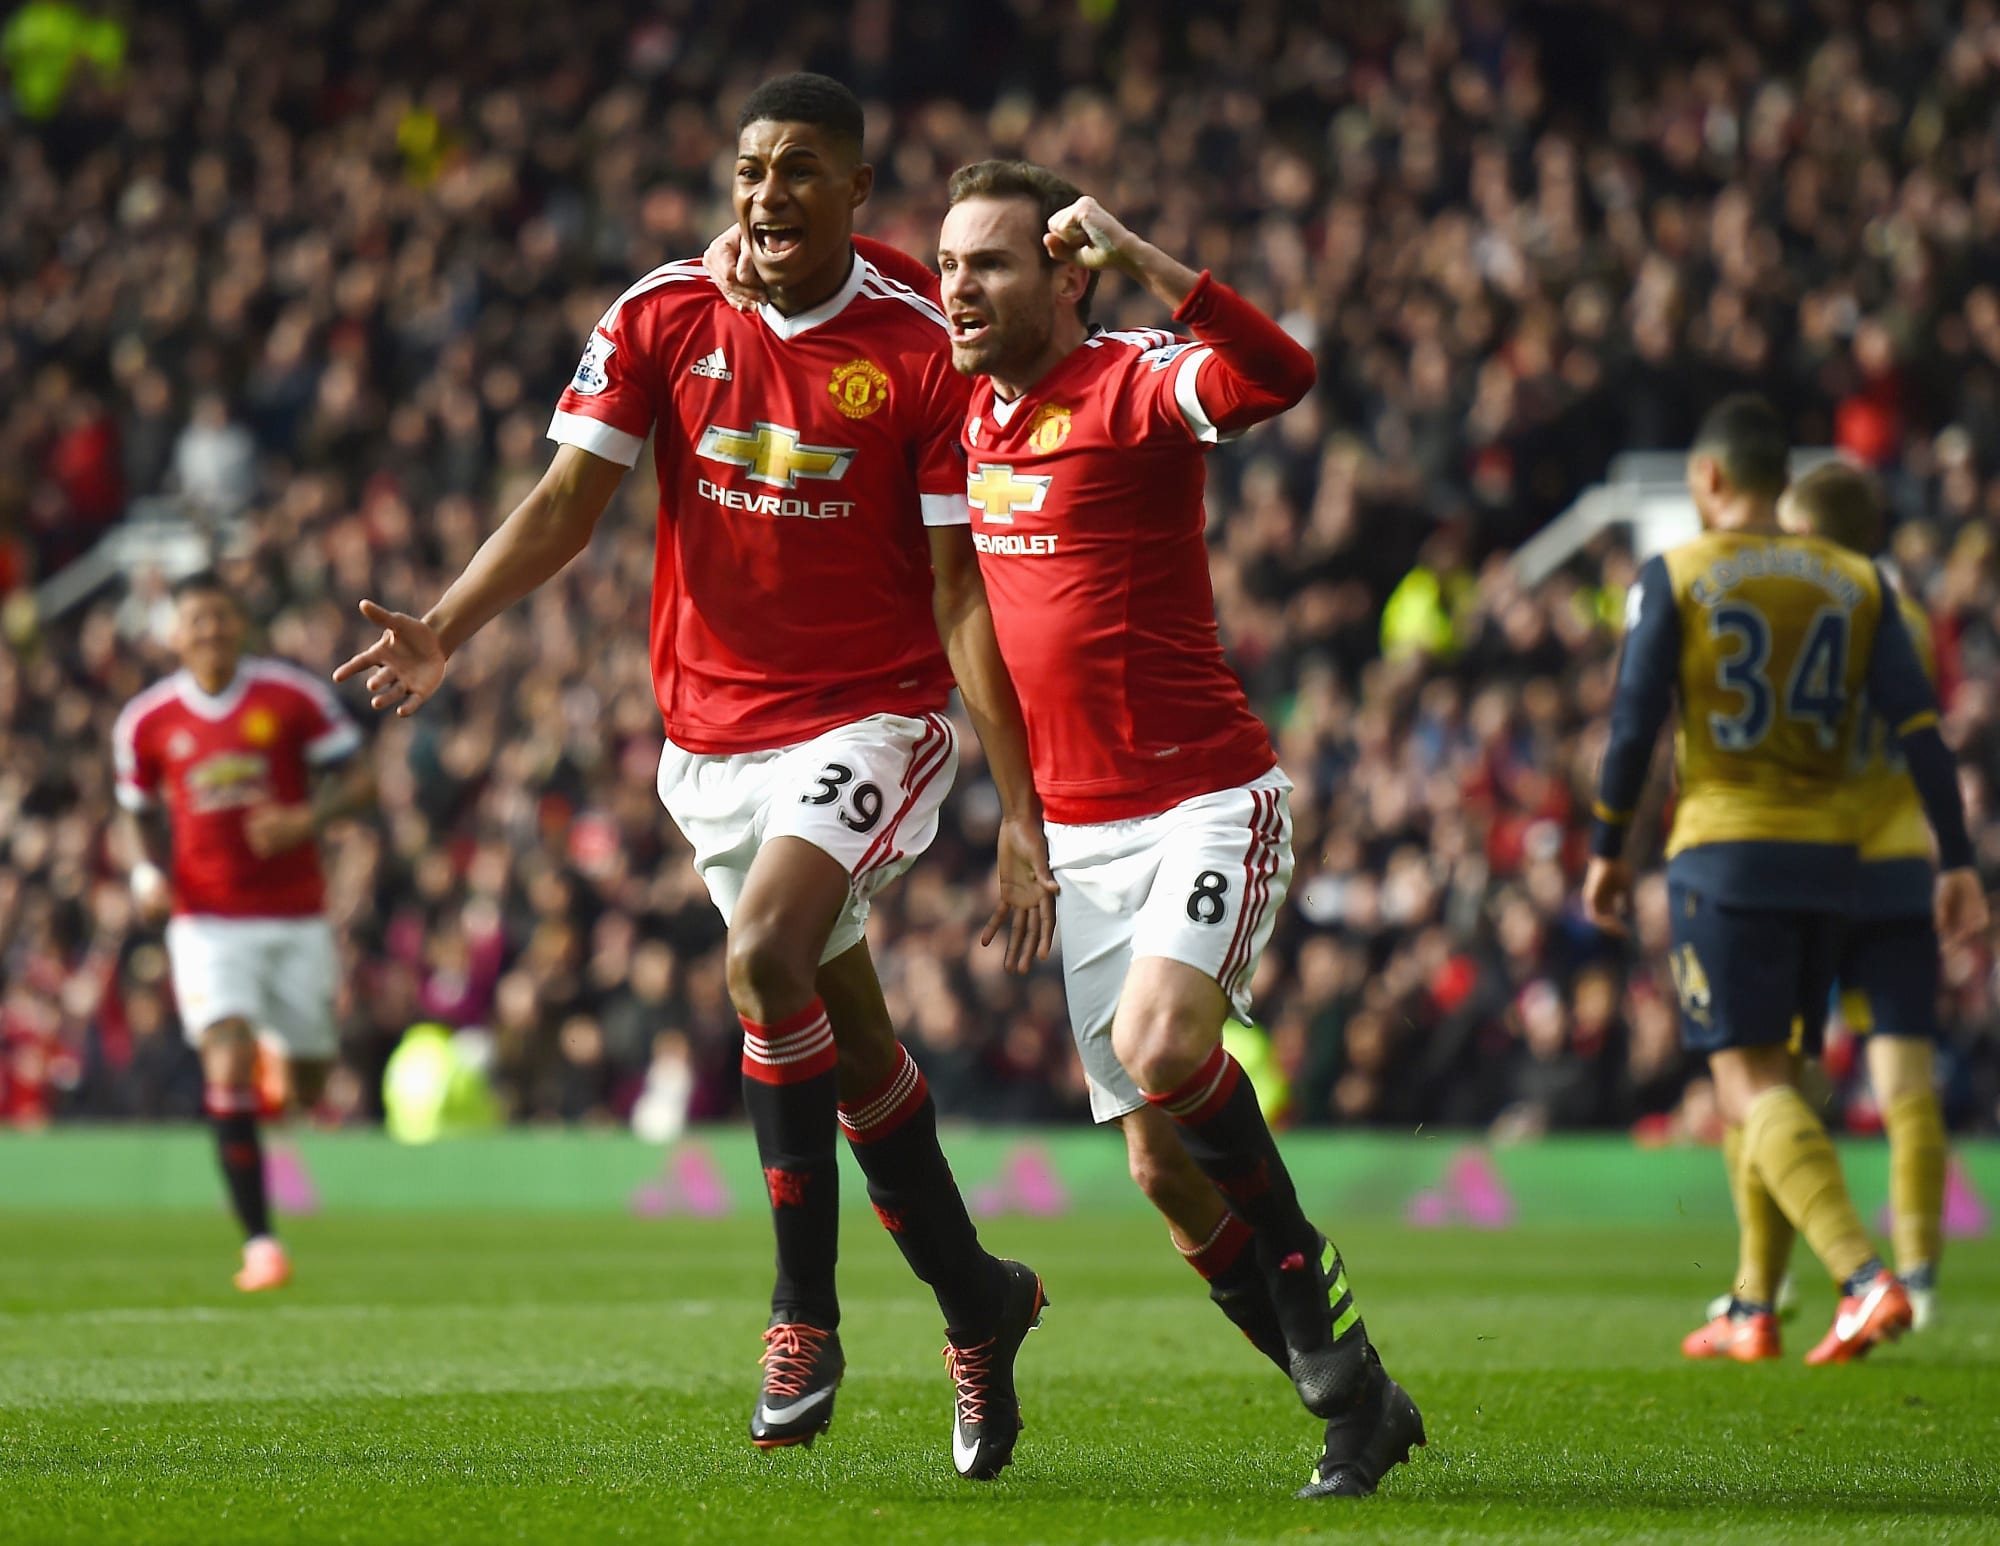 Manchester United 32 Arsenal Rashford heroics earn the win